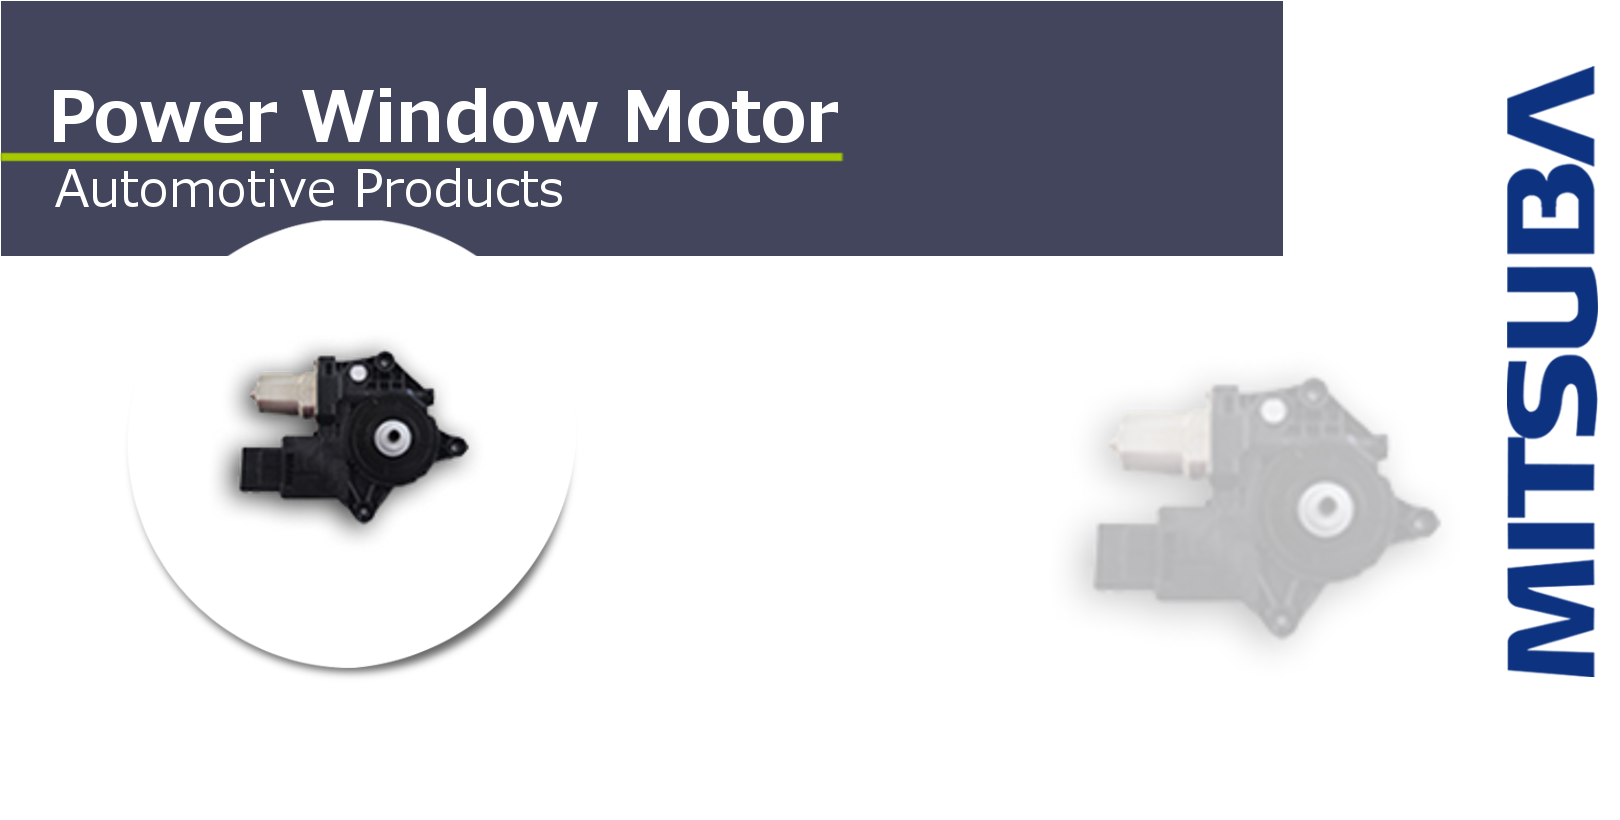 Automotive Products | Power Window Motor